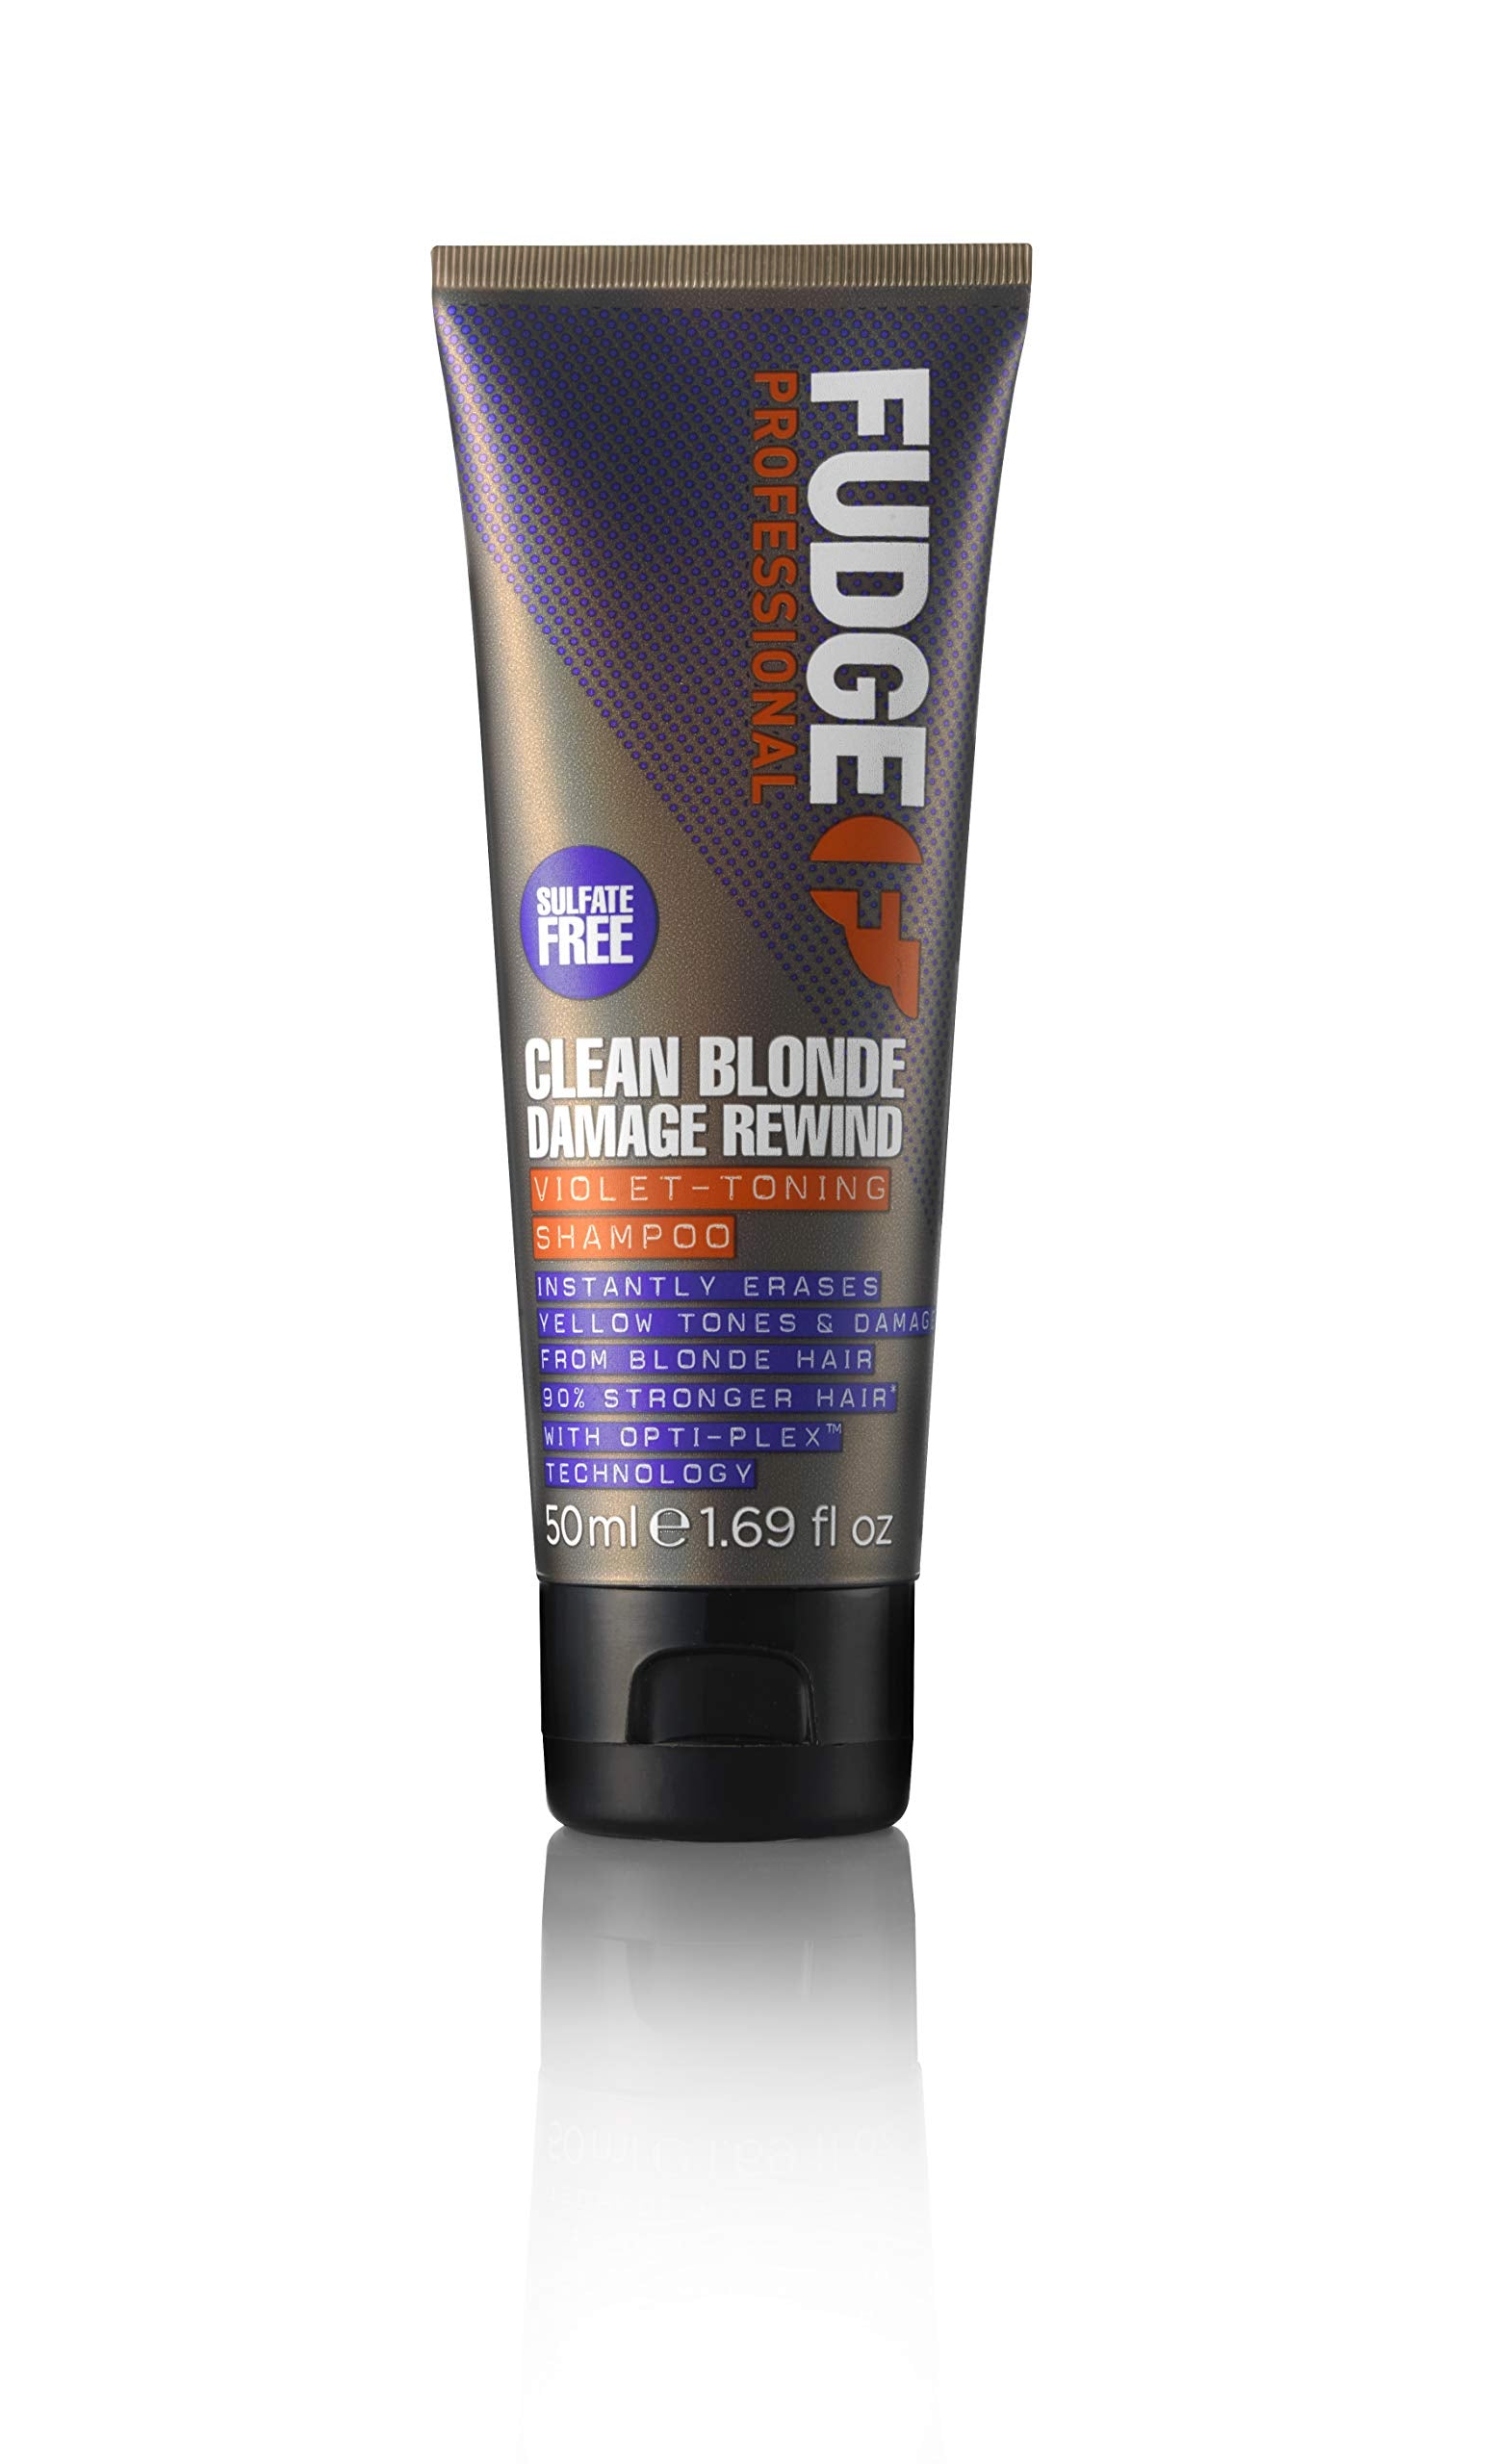 Fudge Professional Purple Toning Shampoo, Clean Blonde Damage Rewind Shampoo, For Blonde Hair, Travel Size, 50 ml